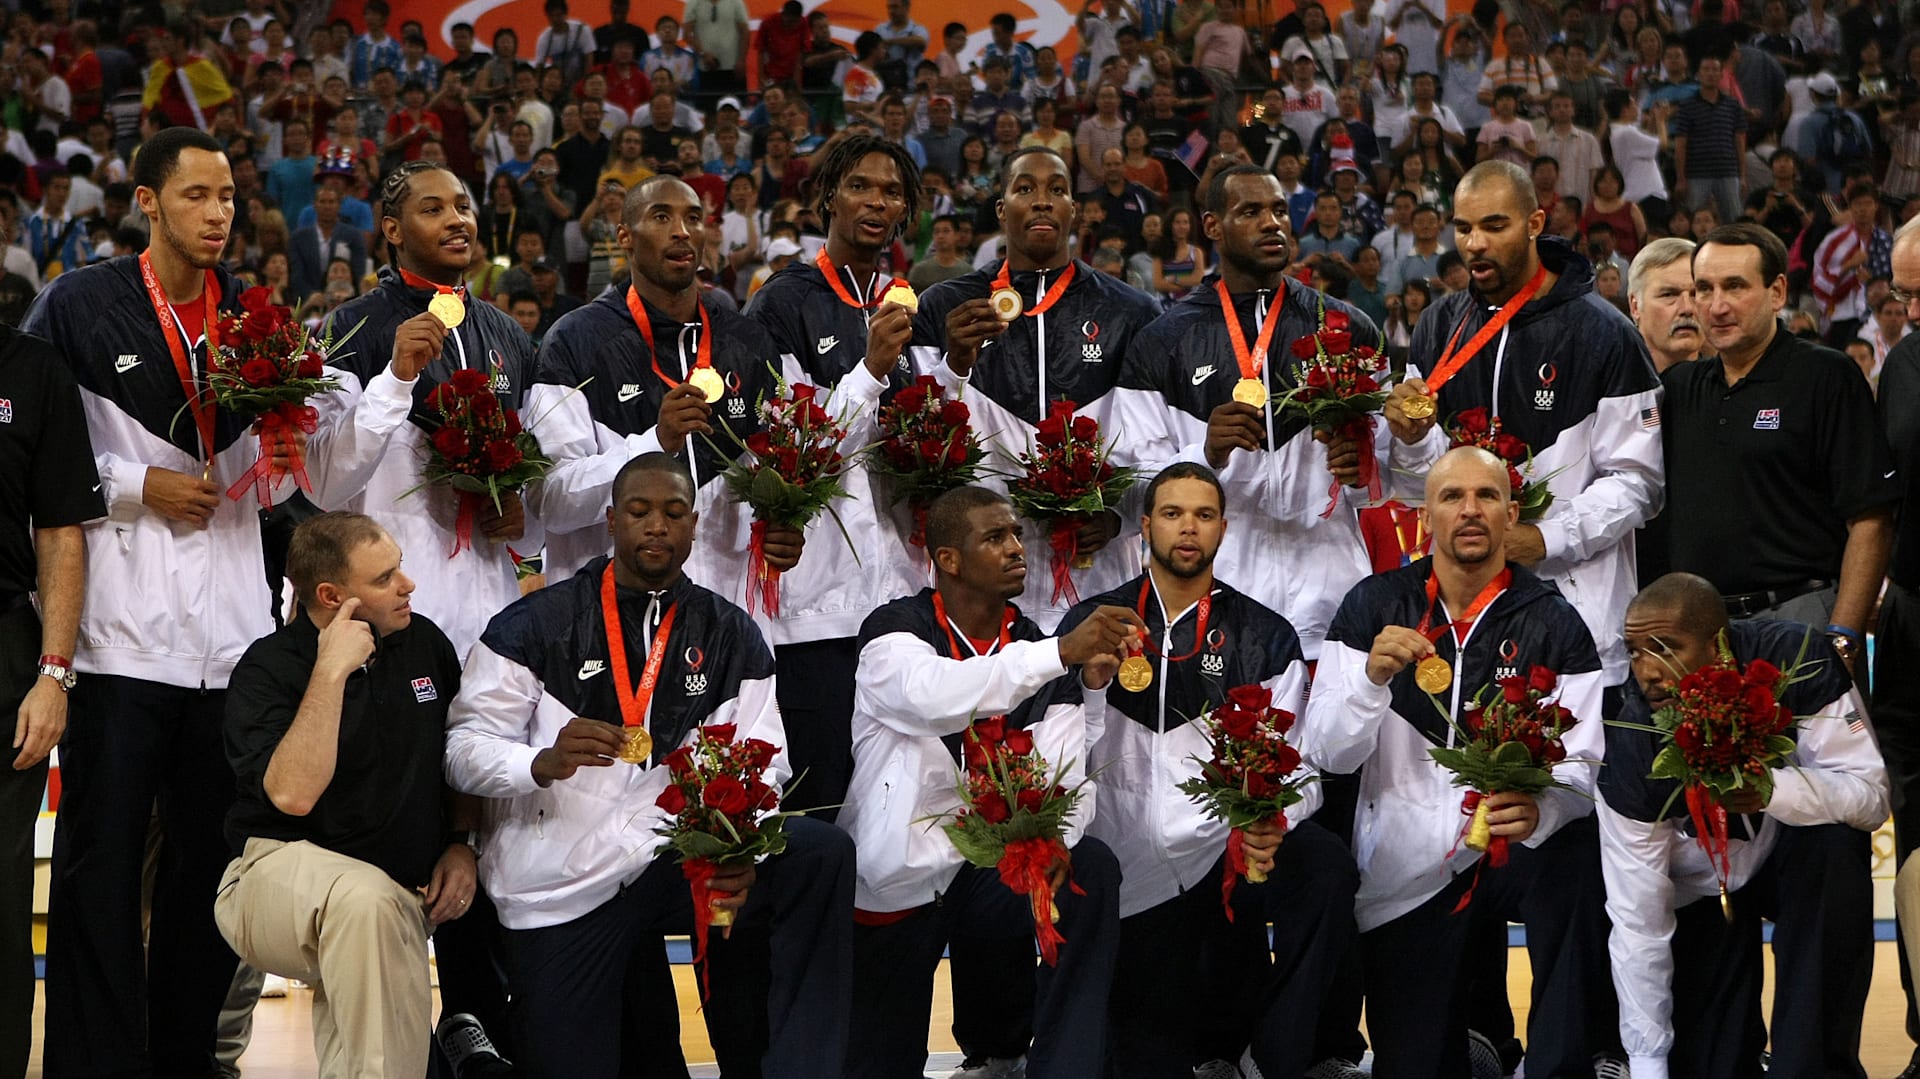 Nike Team USA Basketball Olympics James Harden #13 White Jersey Size Medium